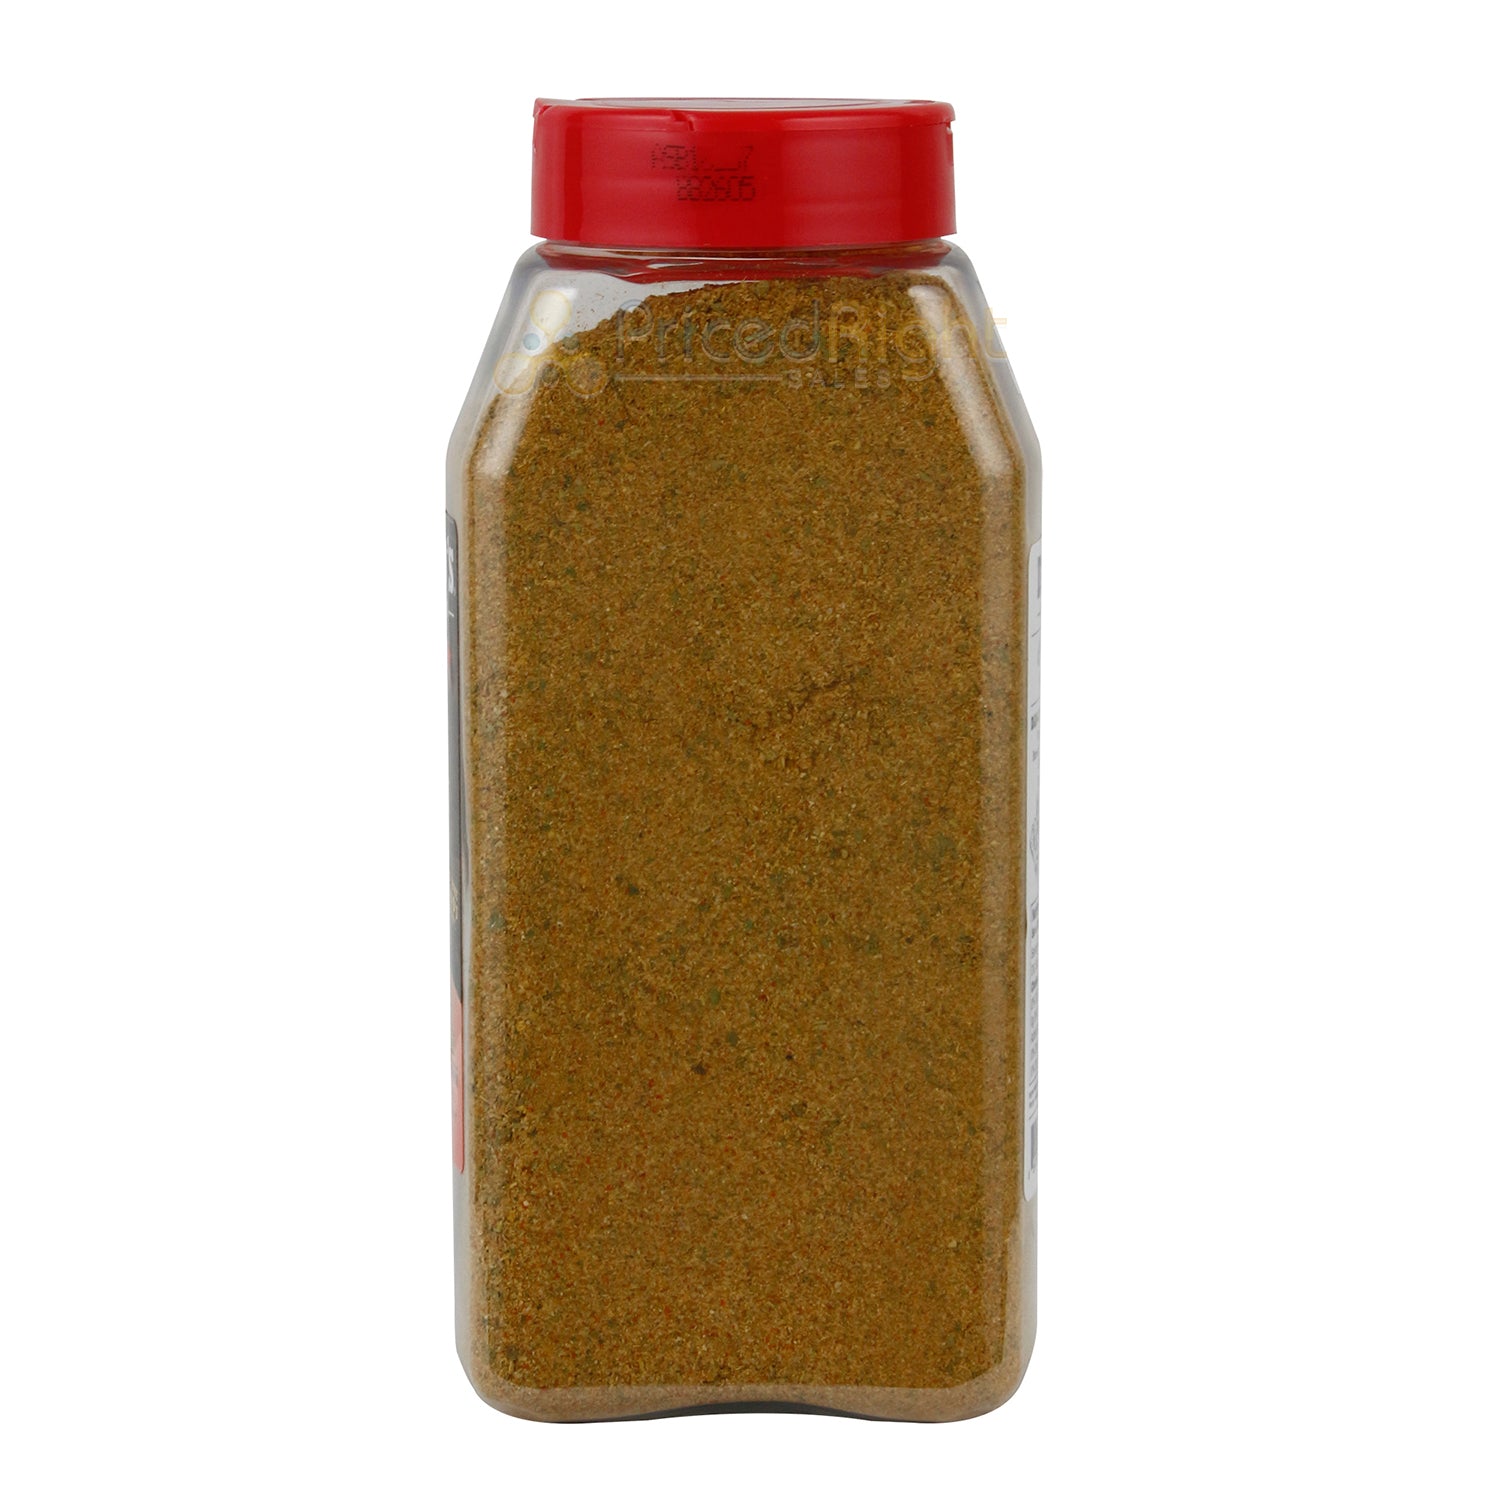 Dan-O's Spicy Original All-Purpose Low Sodium Seasoning Gluten-Free No MSG 20 Oz